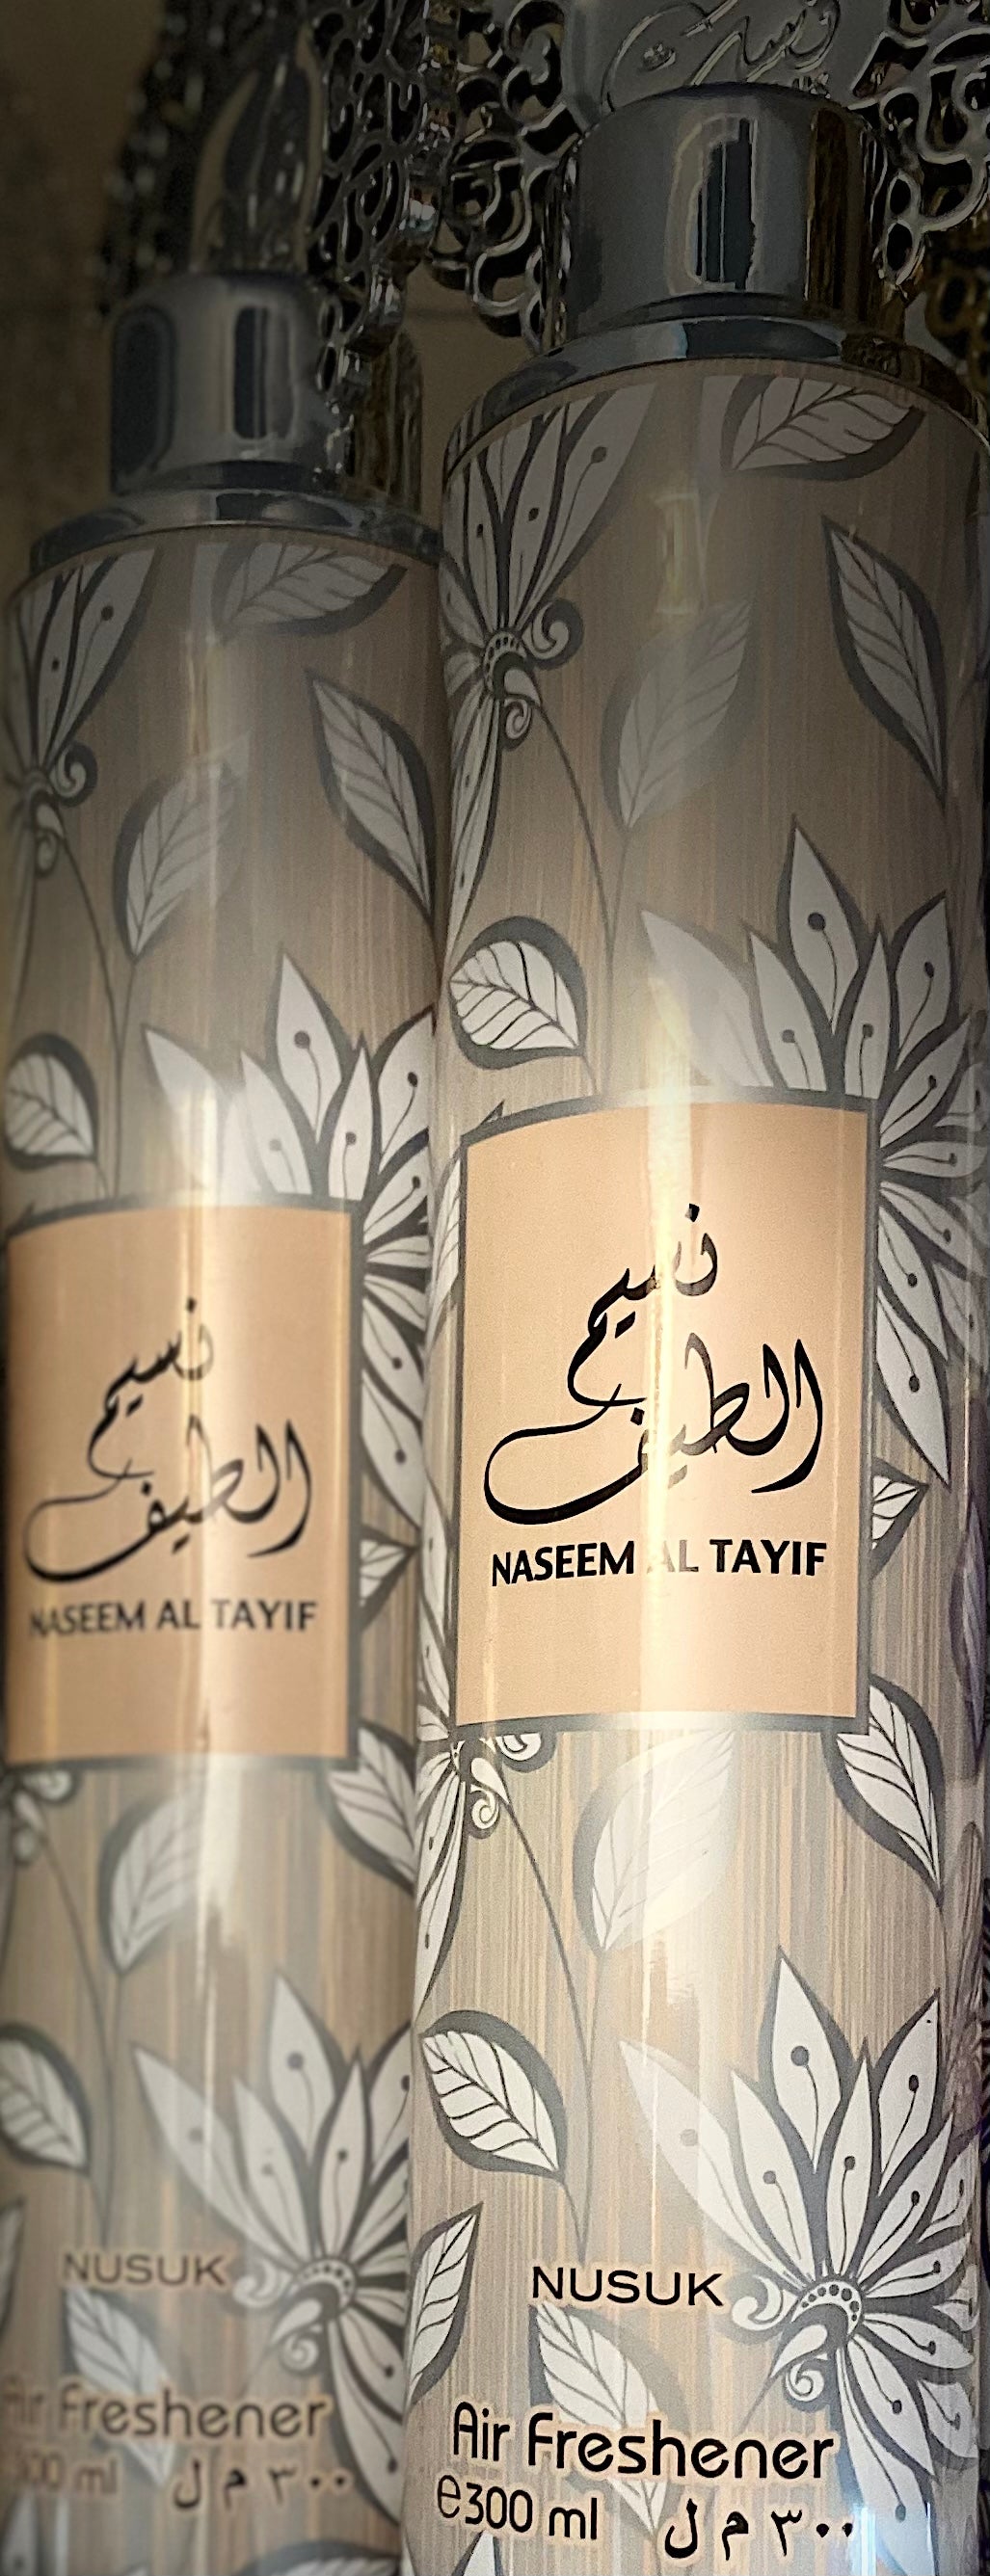 Naseem Al Tayif  Nusuk Air Freshener